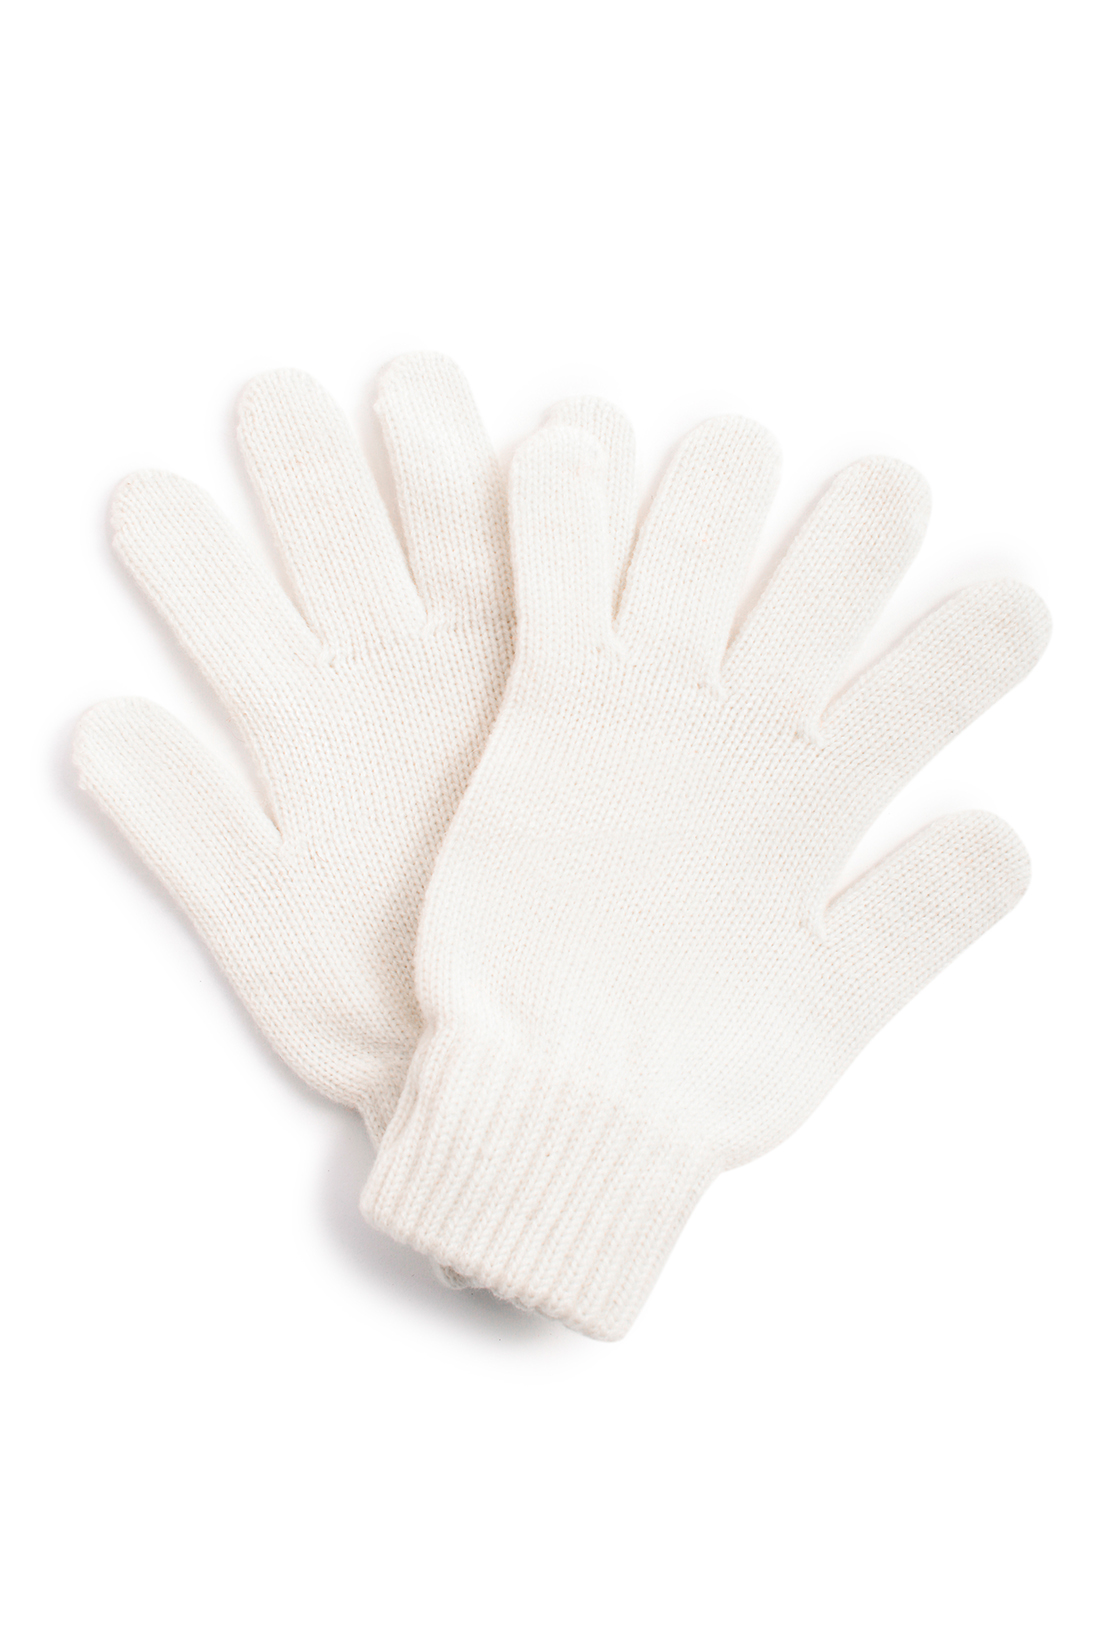 Полушерстяные перчатки (арт. baon B369509), размер Без/раз, цвет белый